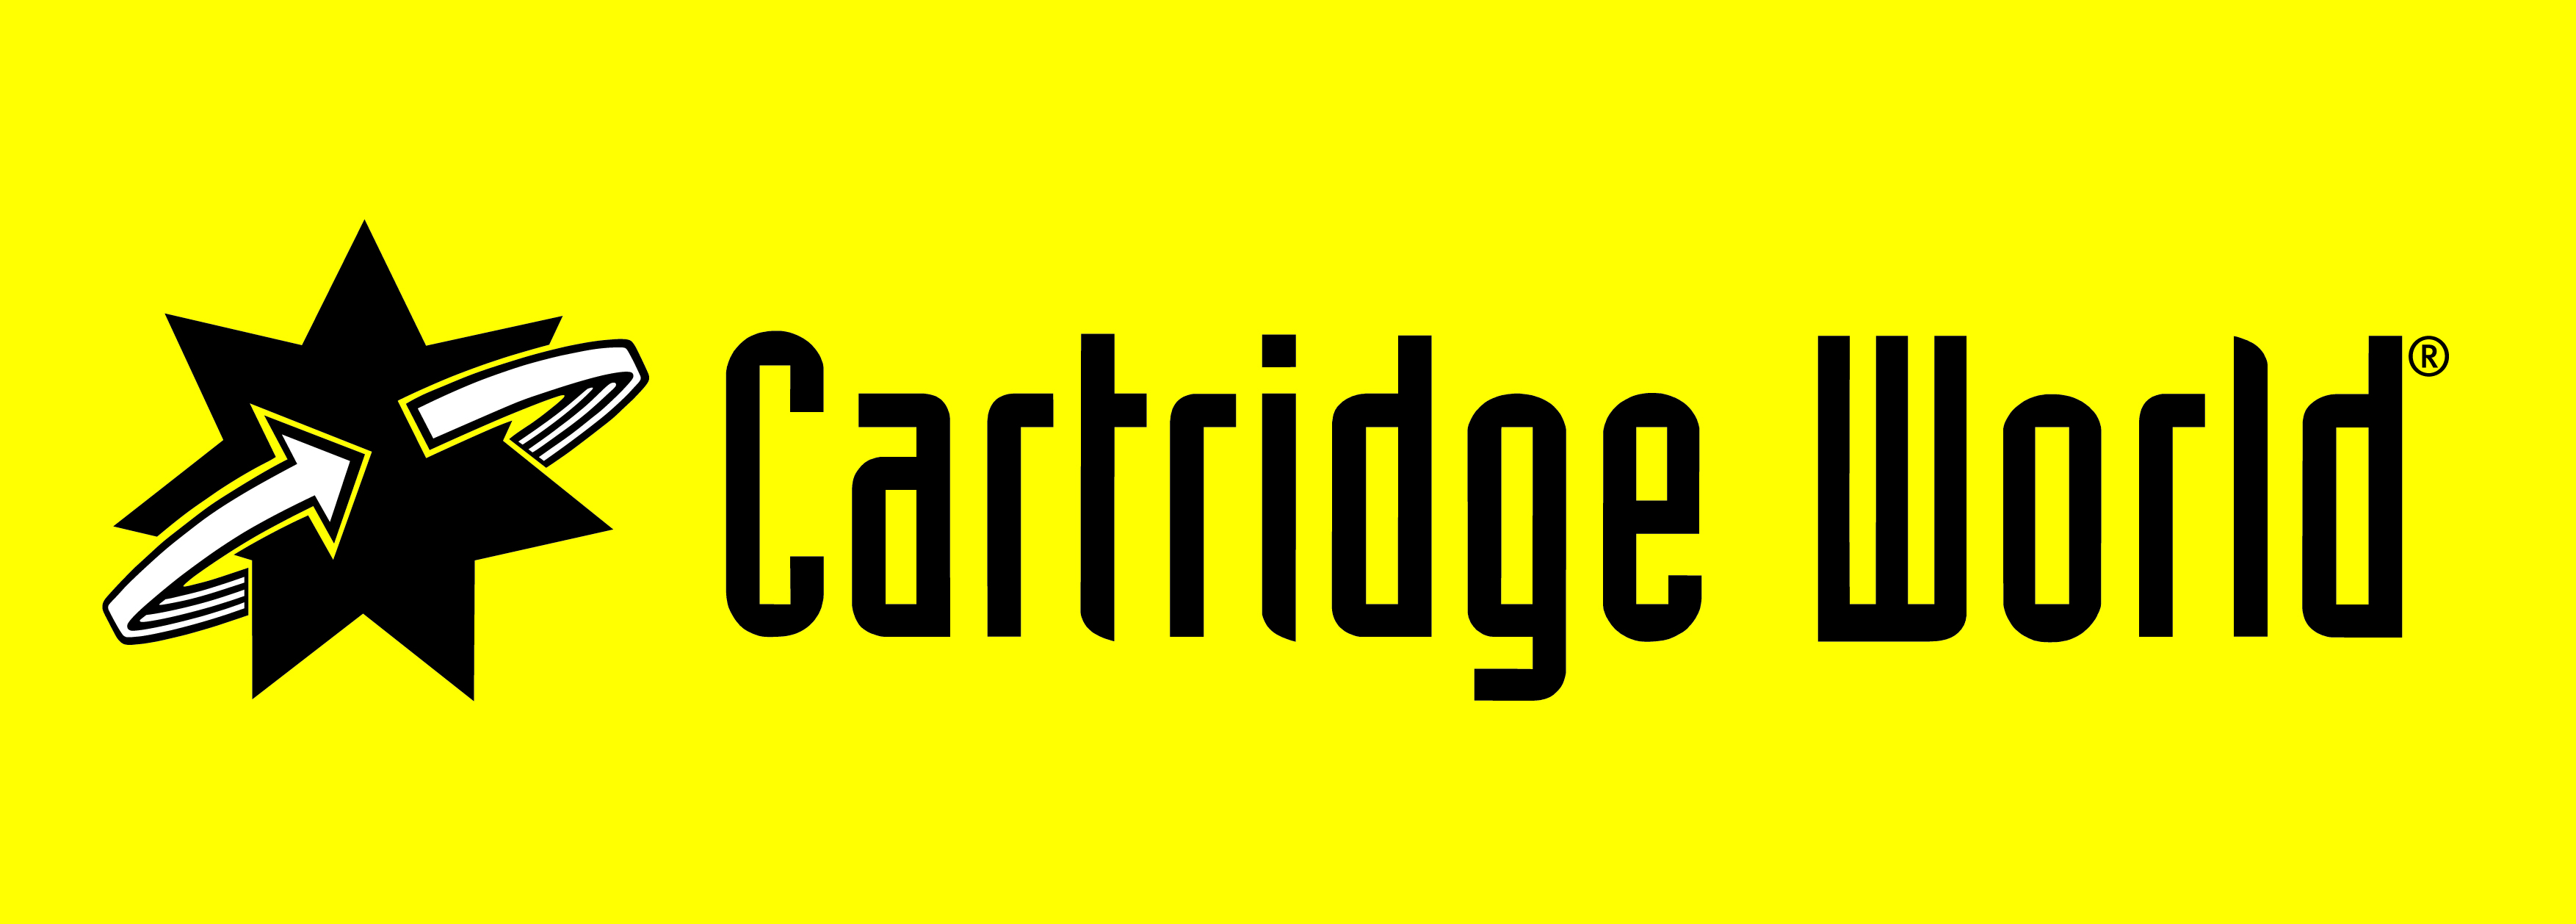 Cartridge World Logo photo - 1